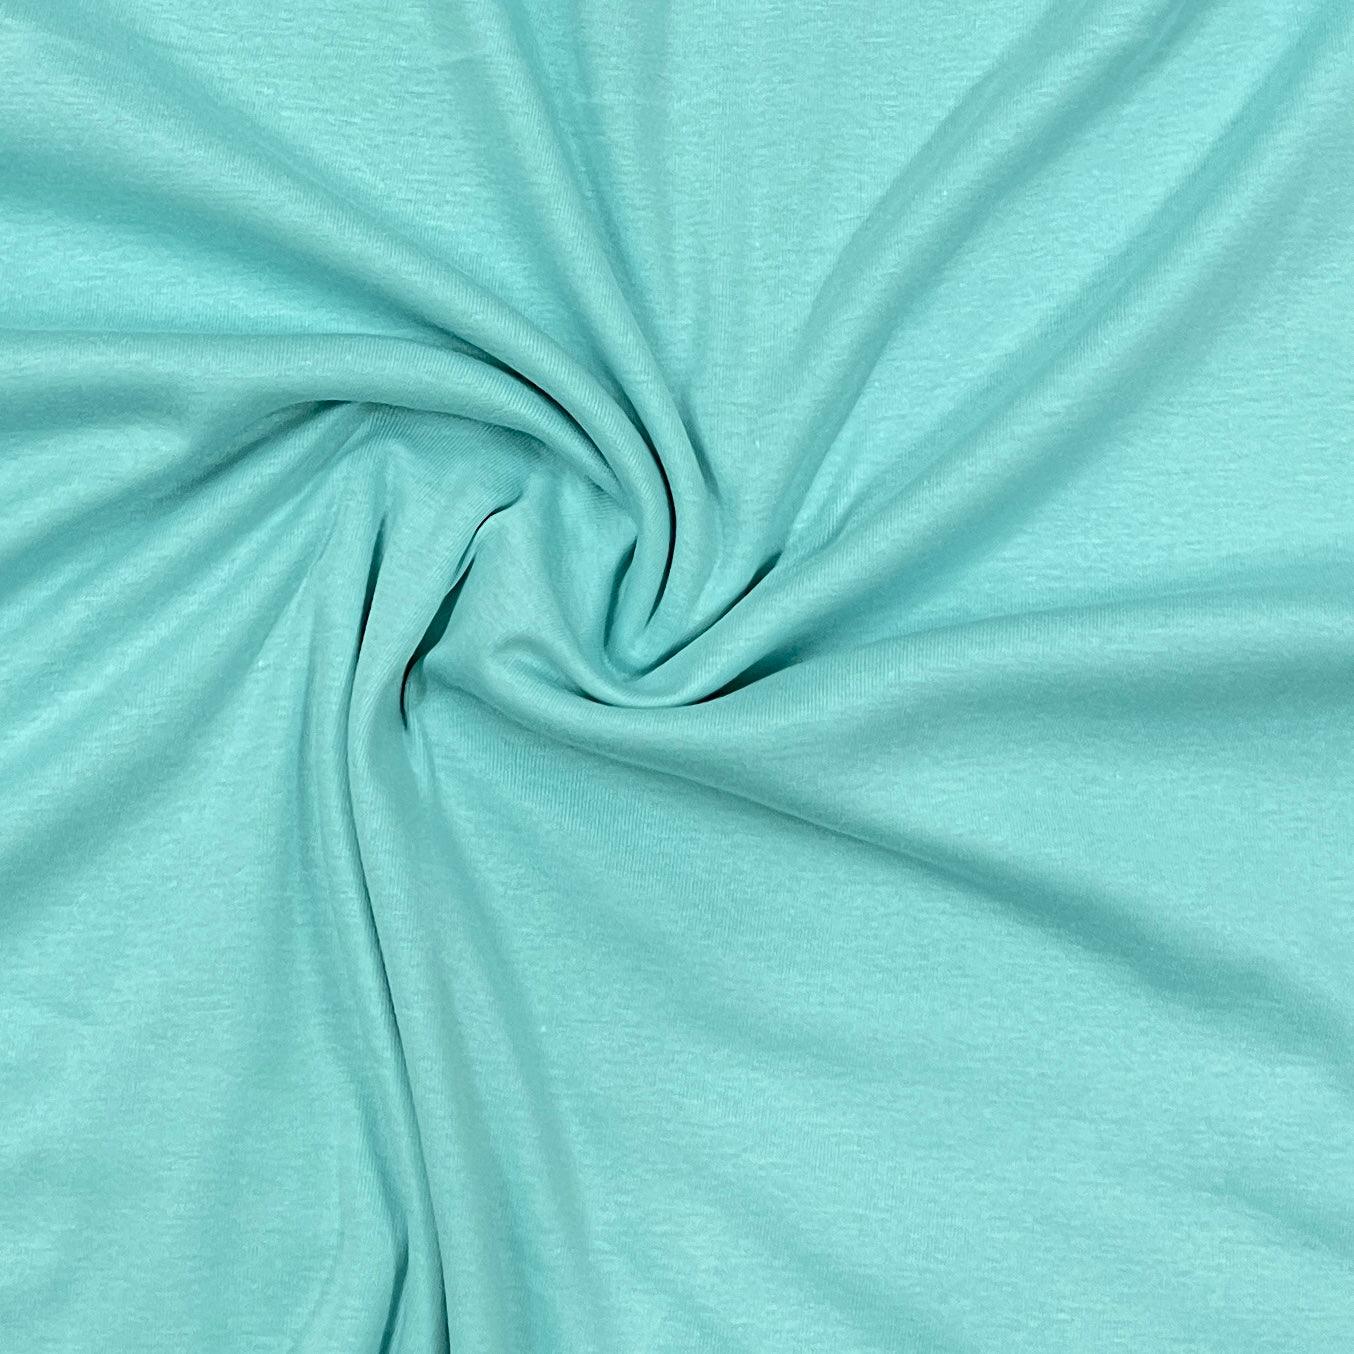 Aqua Organic Cotton Rib Knit Fabric - Nature's Fabrics